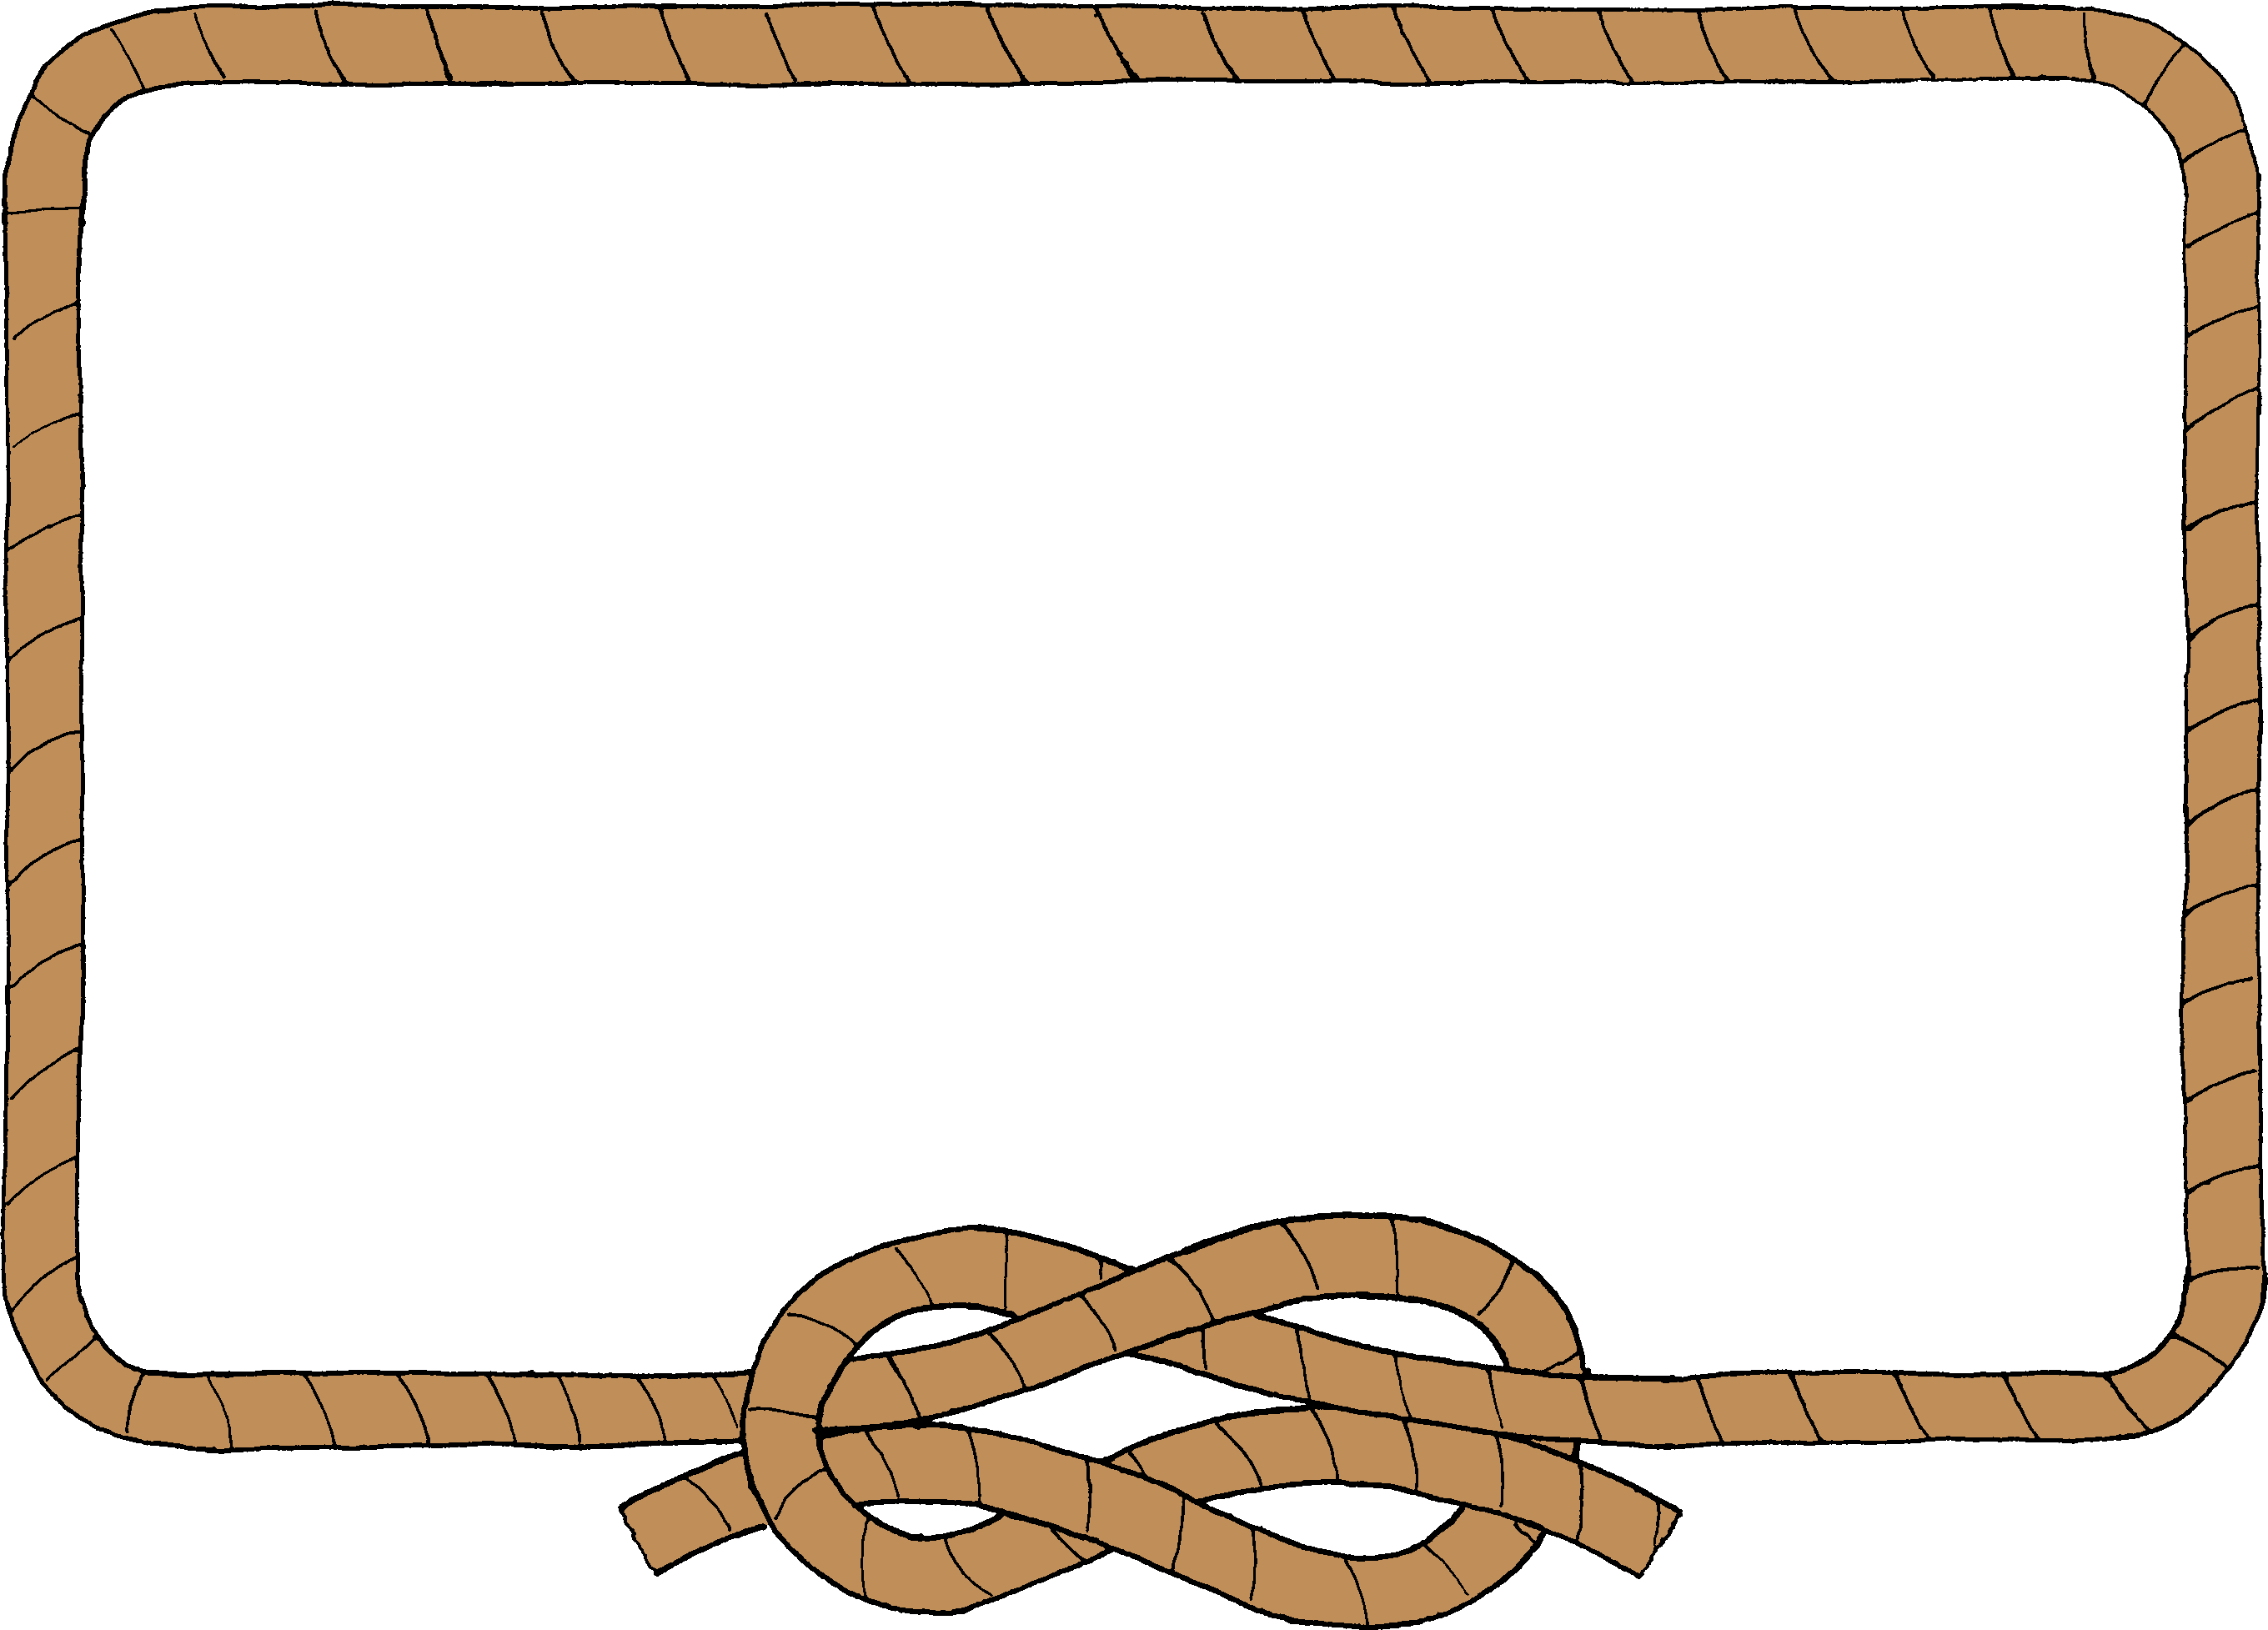 Rope Border Clip Art N8 free image.